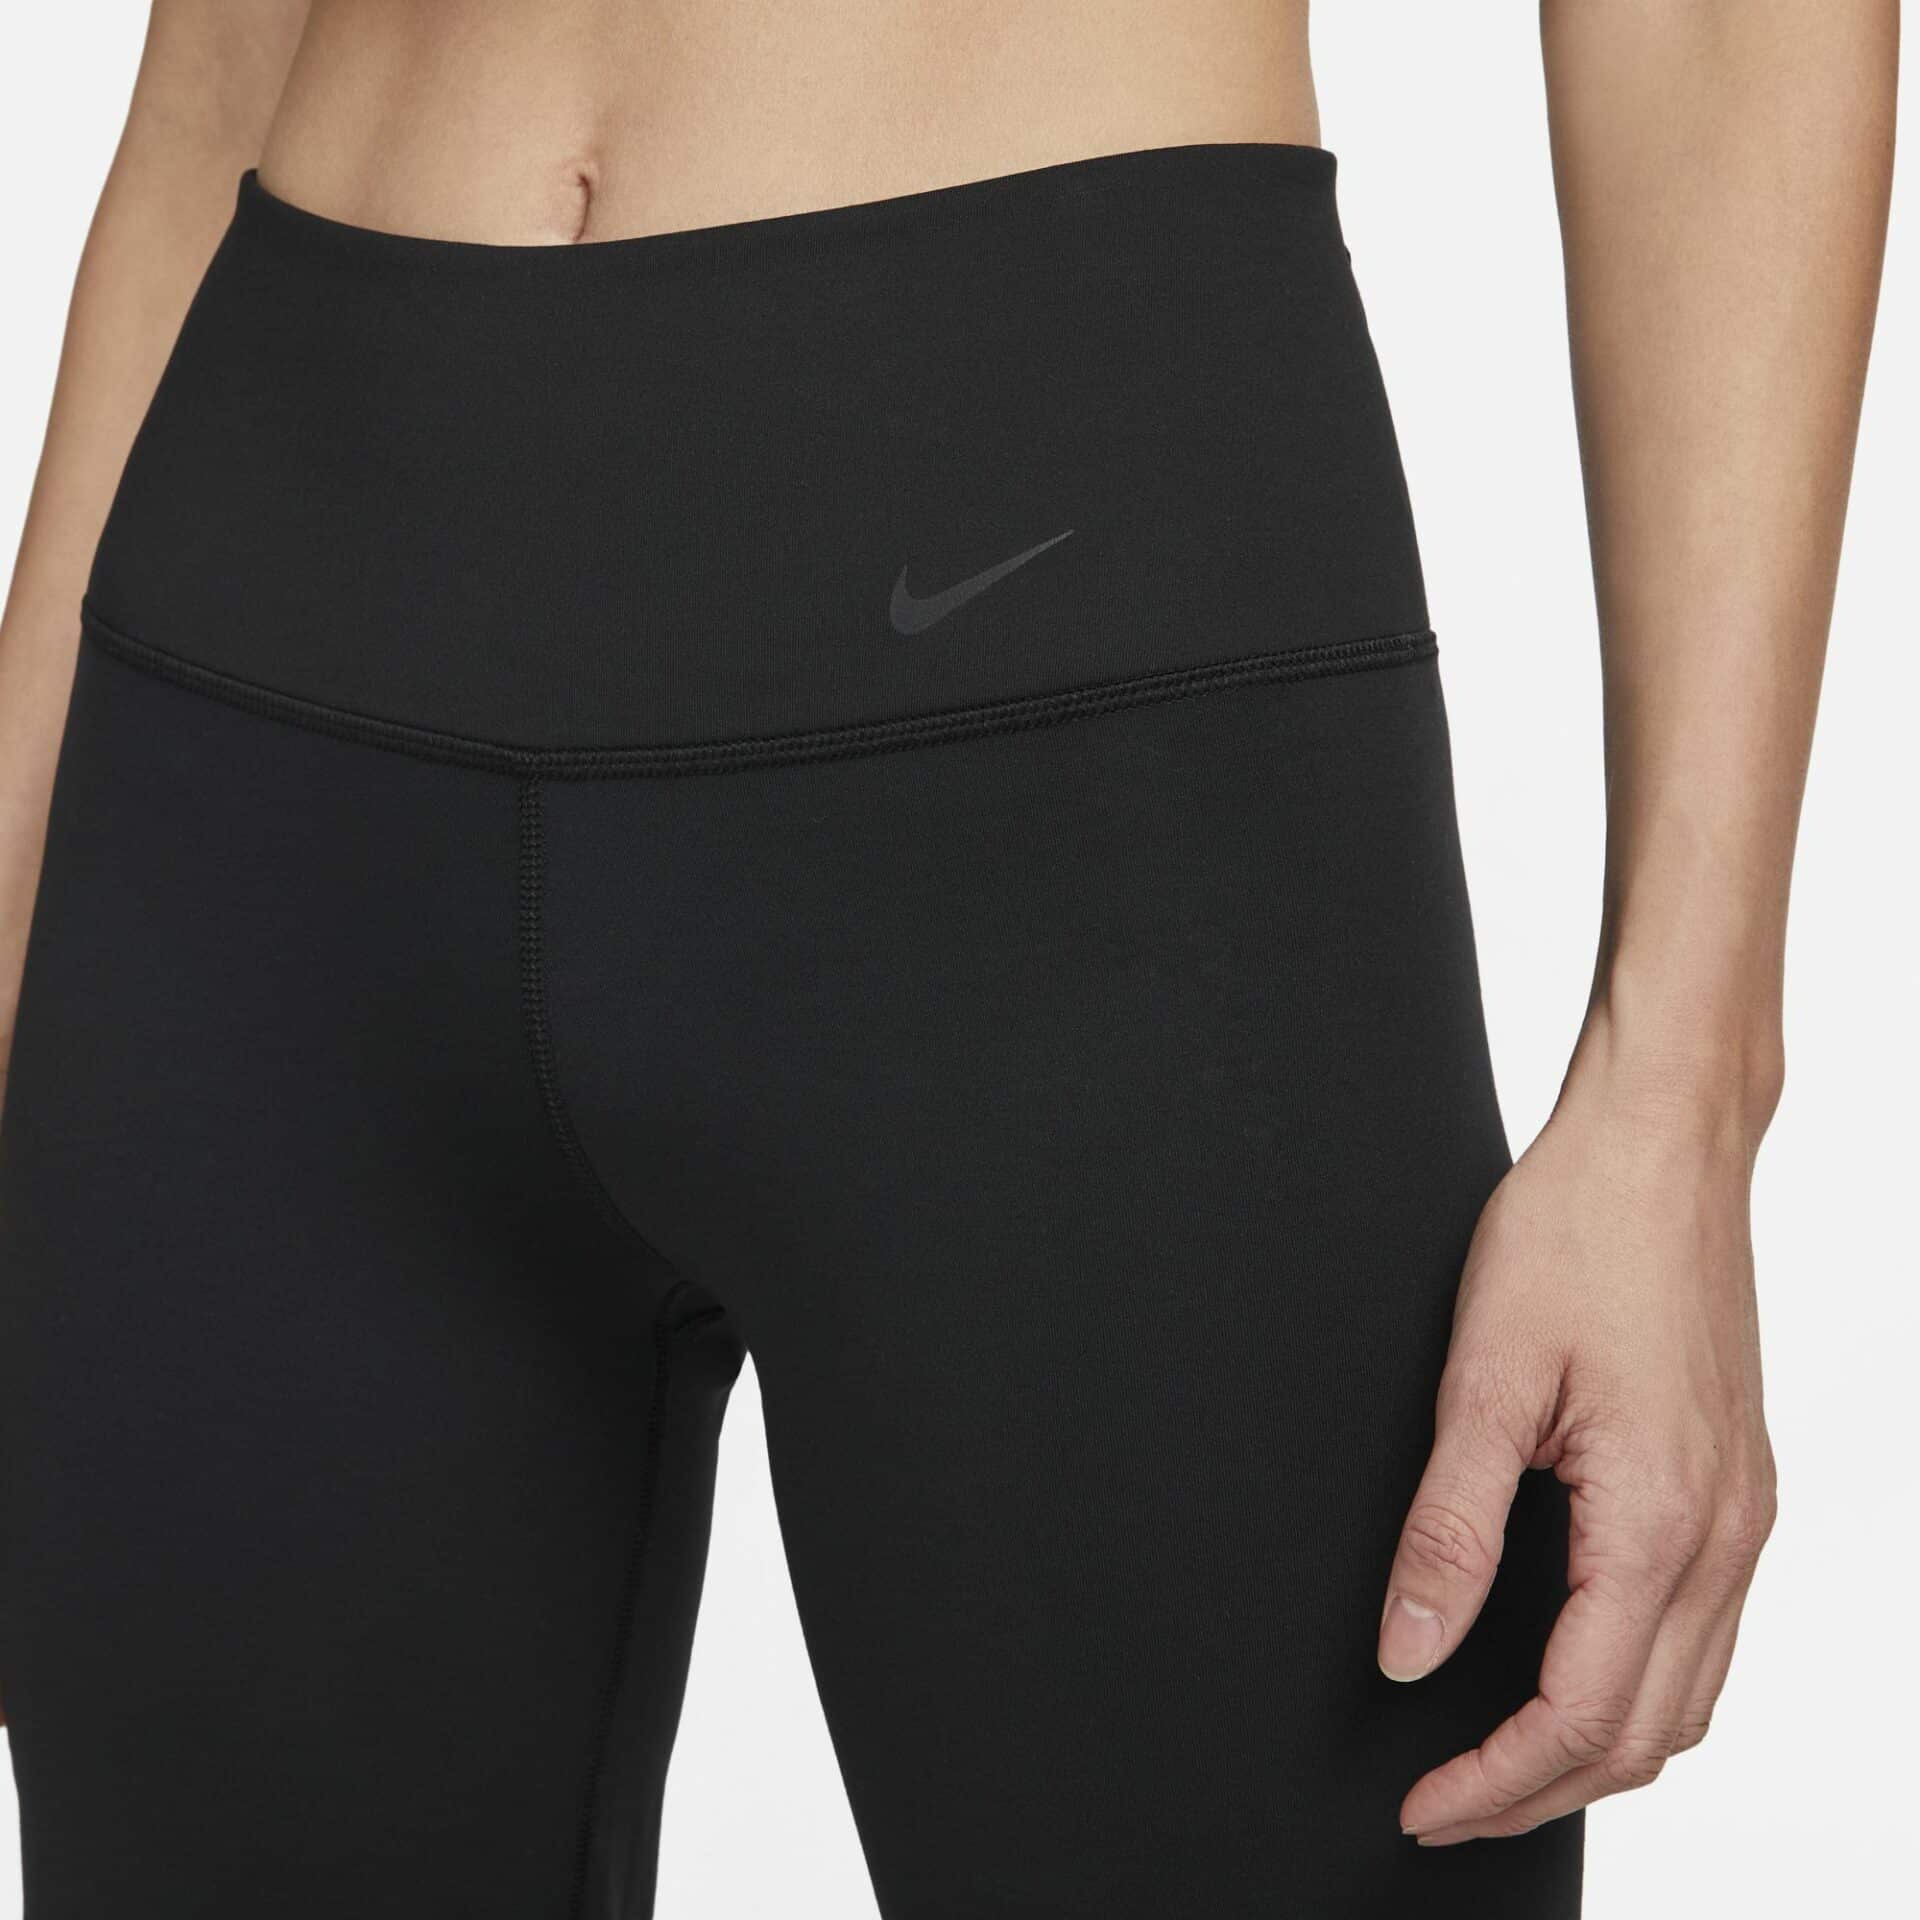 Nike Power Women's Training Trousers.